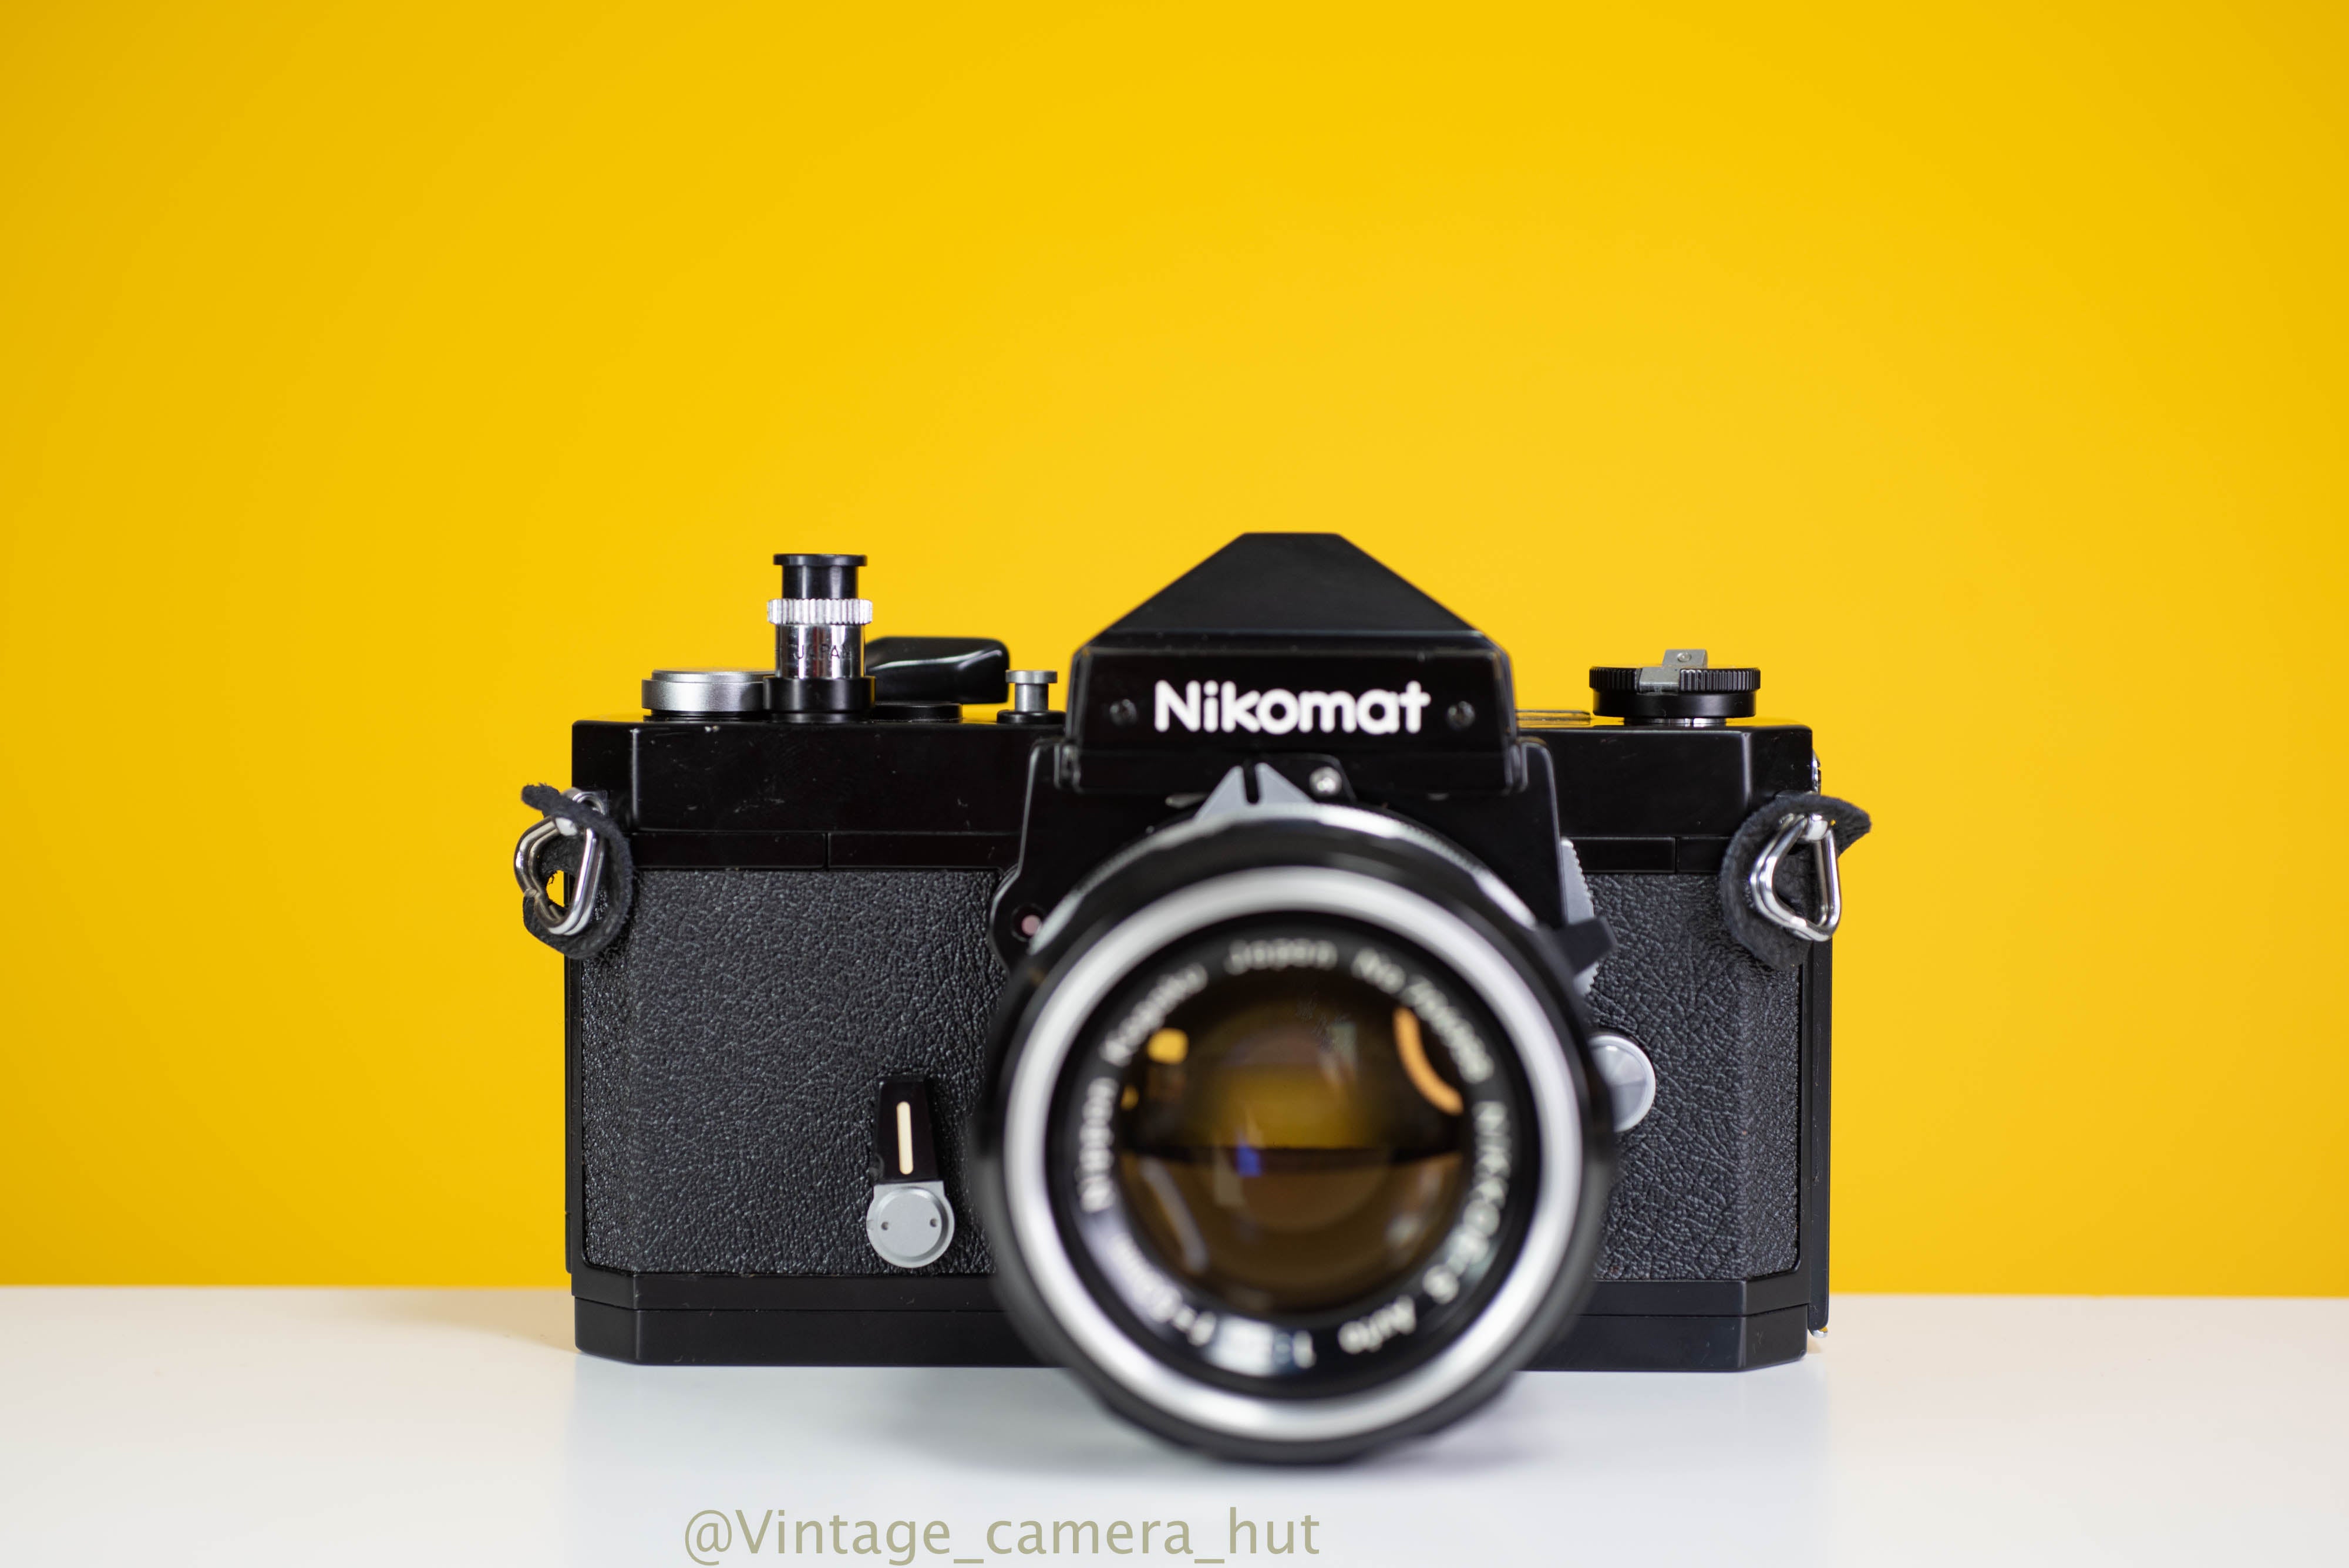 Nikon Nikomat FTN 35mm Film Camera with Nikkor-S 50mm f/1.4 Lens 